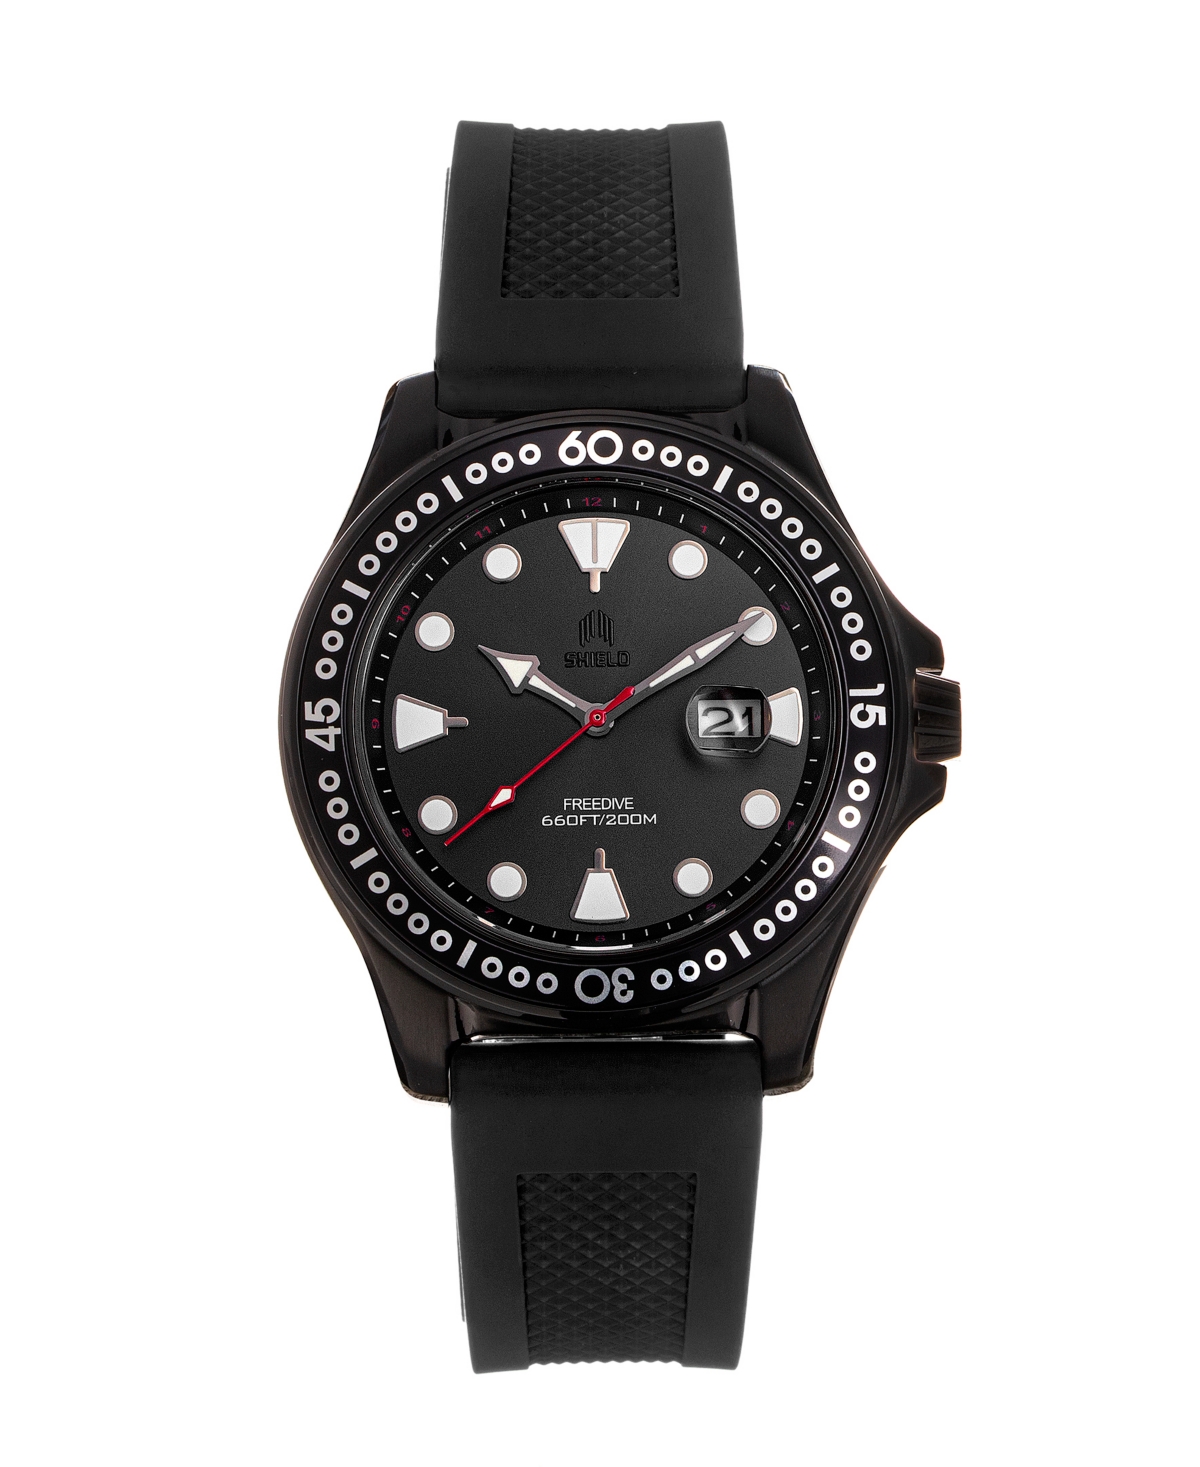 Freedive Black or Orange or Green or Navy or Light Blue or Black Silicone Strap Watch, 48mm - Black